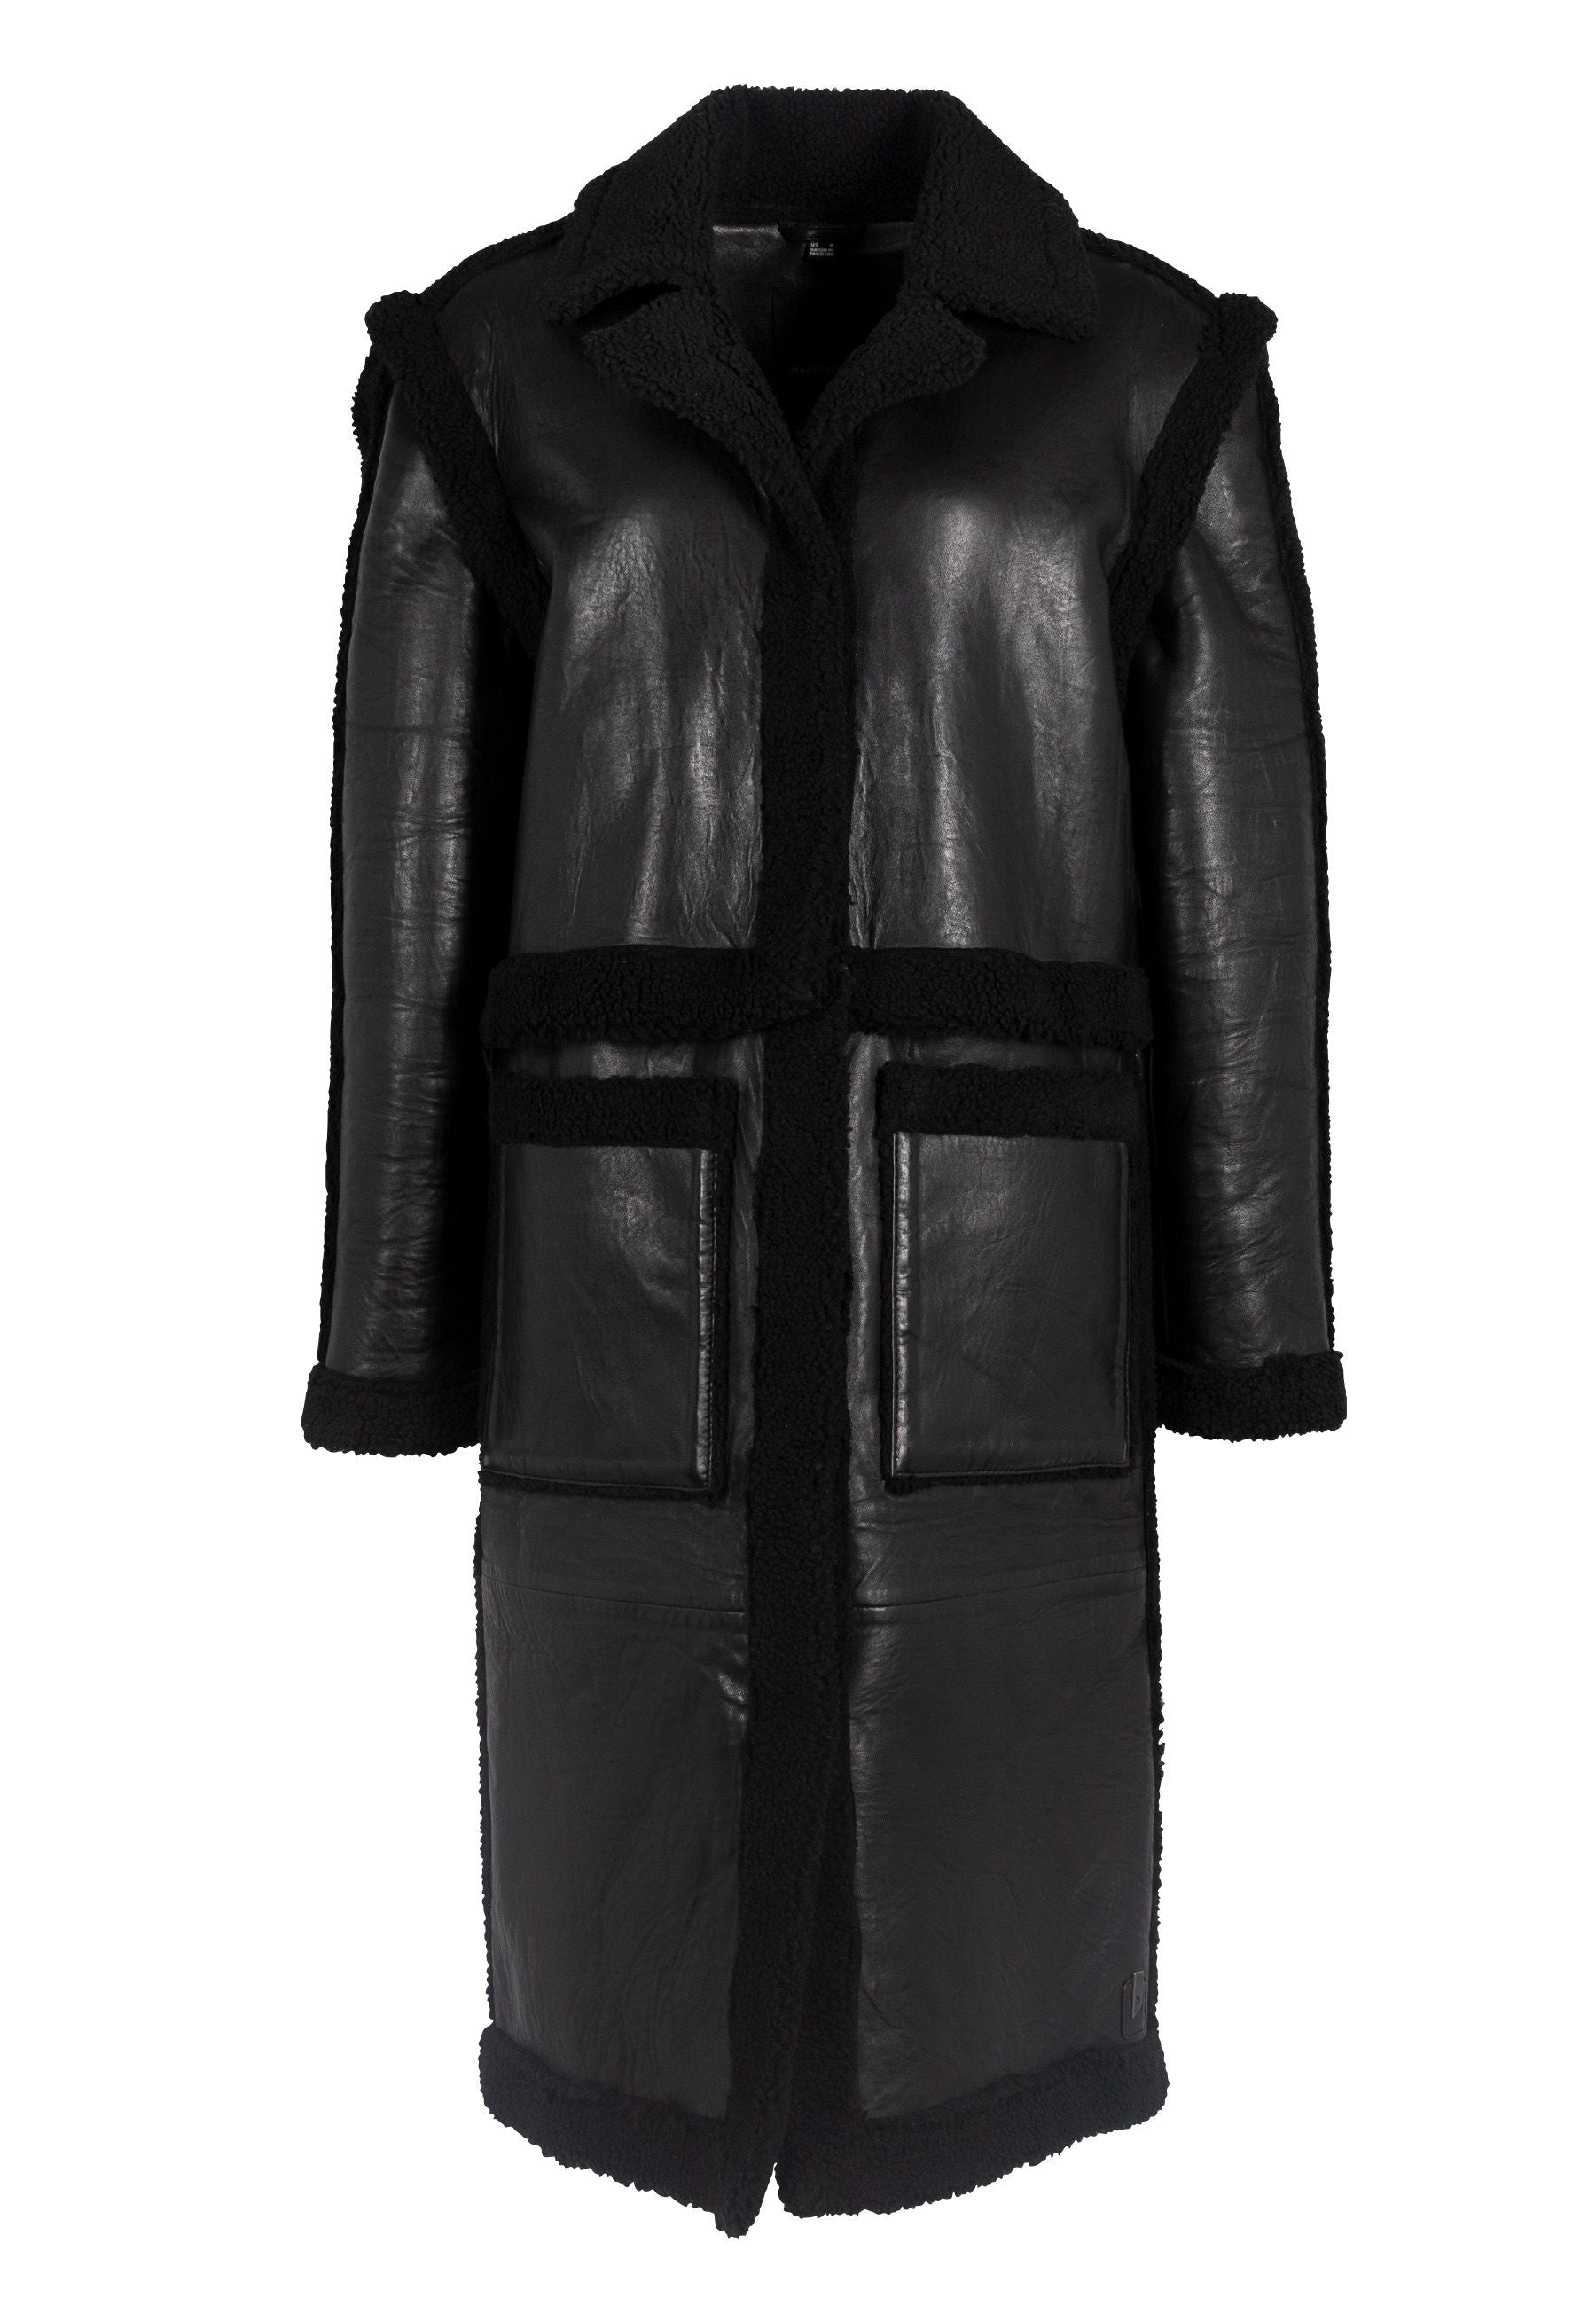 Mauritius Women's Tali Cf Leather Jacket, Black